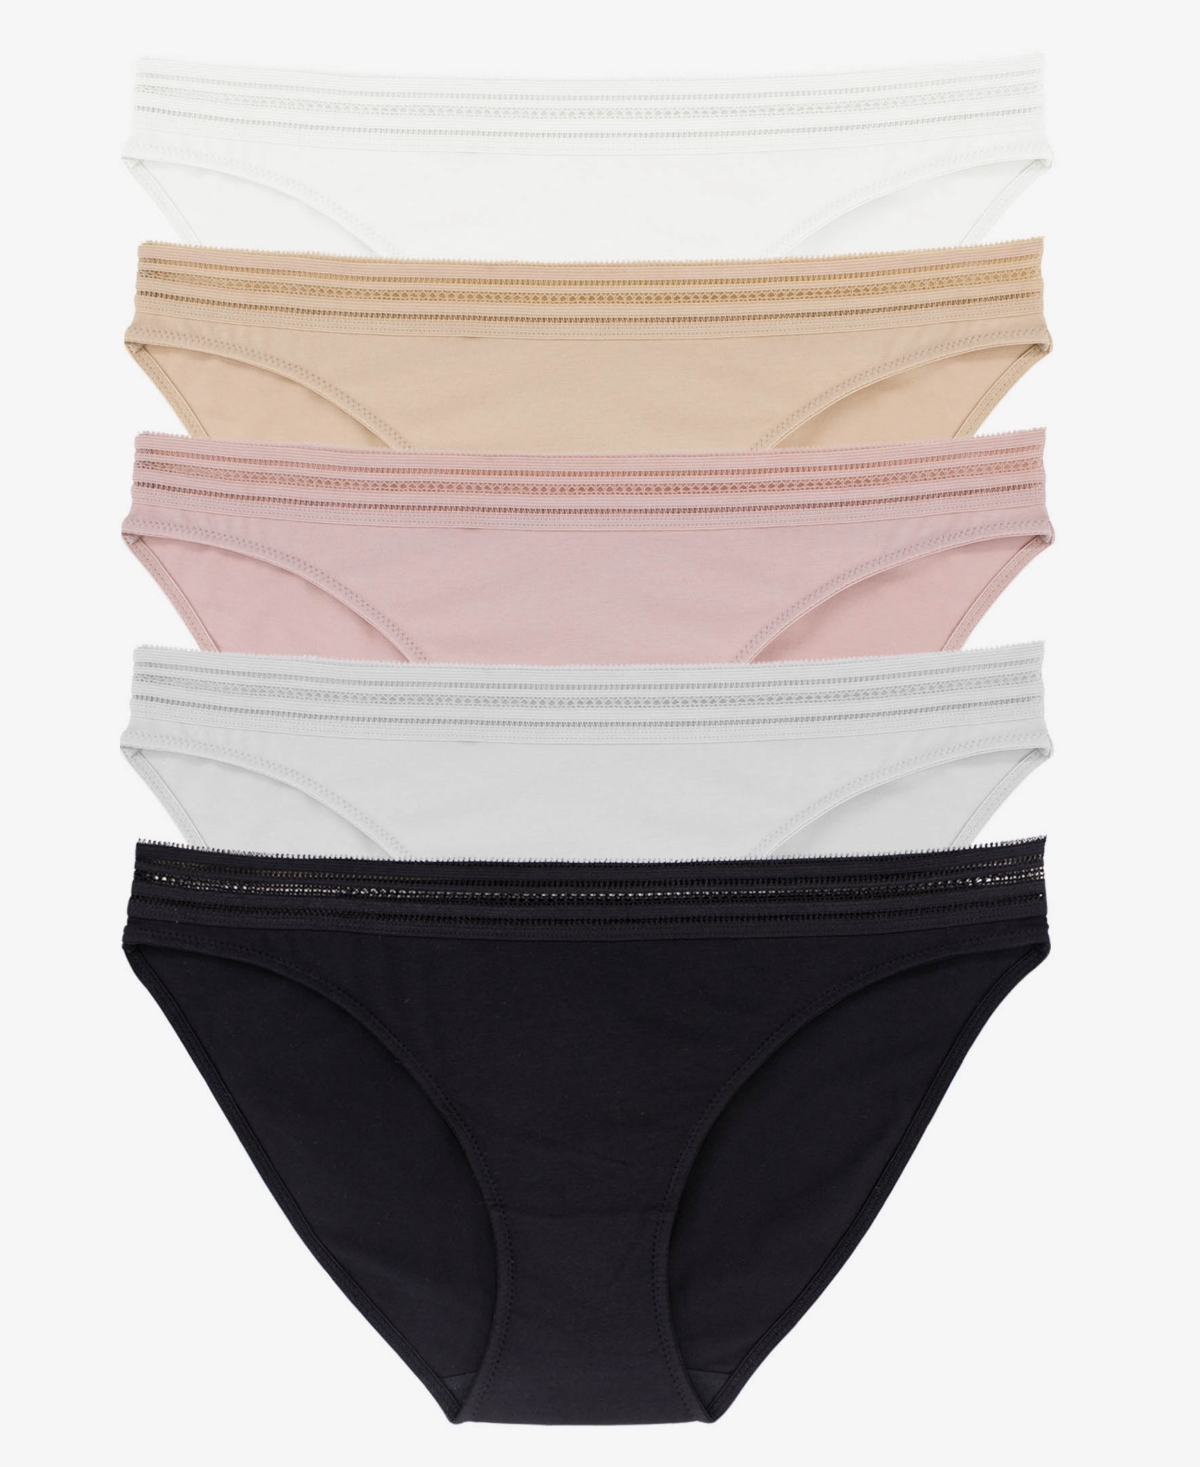 Women's Giana Hipster Panty Set, 5 Piece - Ivory, Beige, Pink, Gray, Black